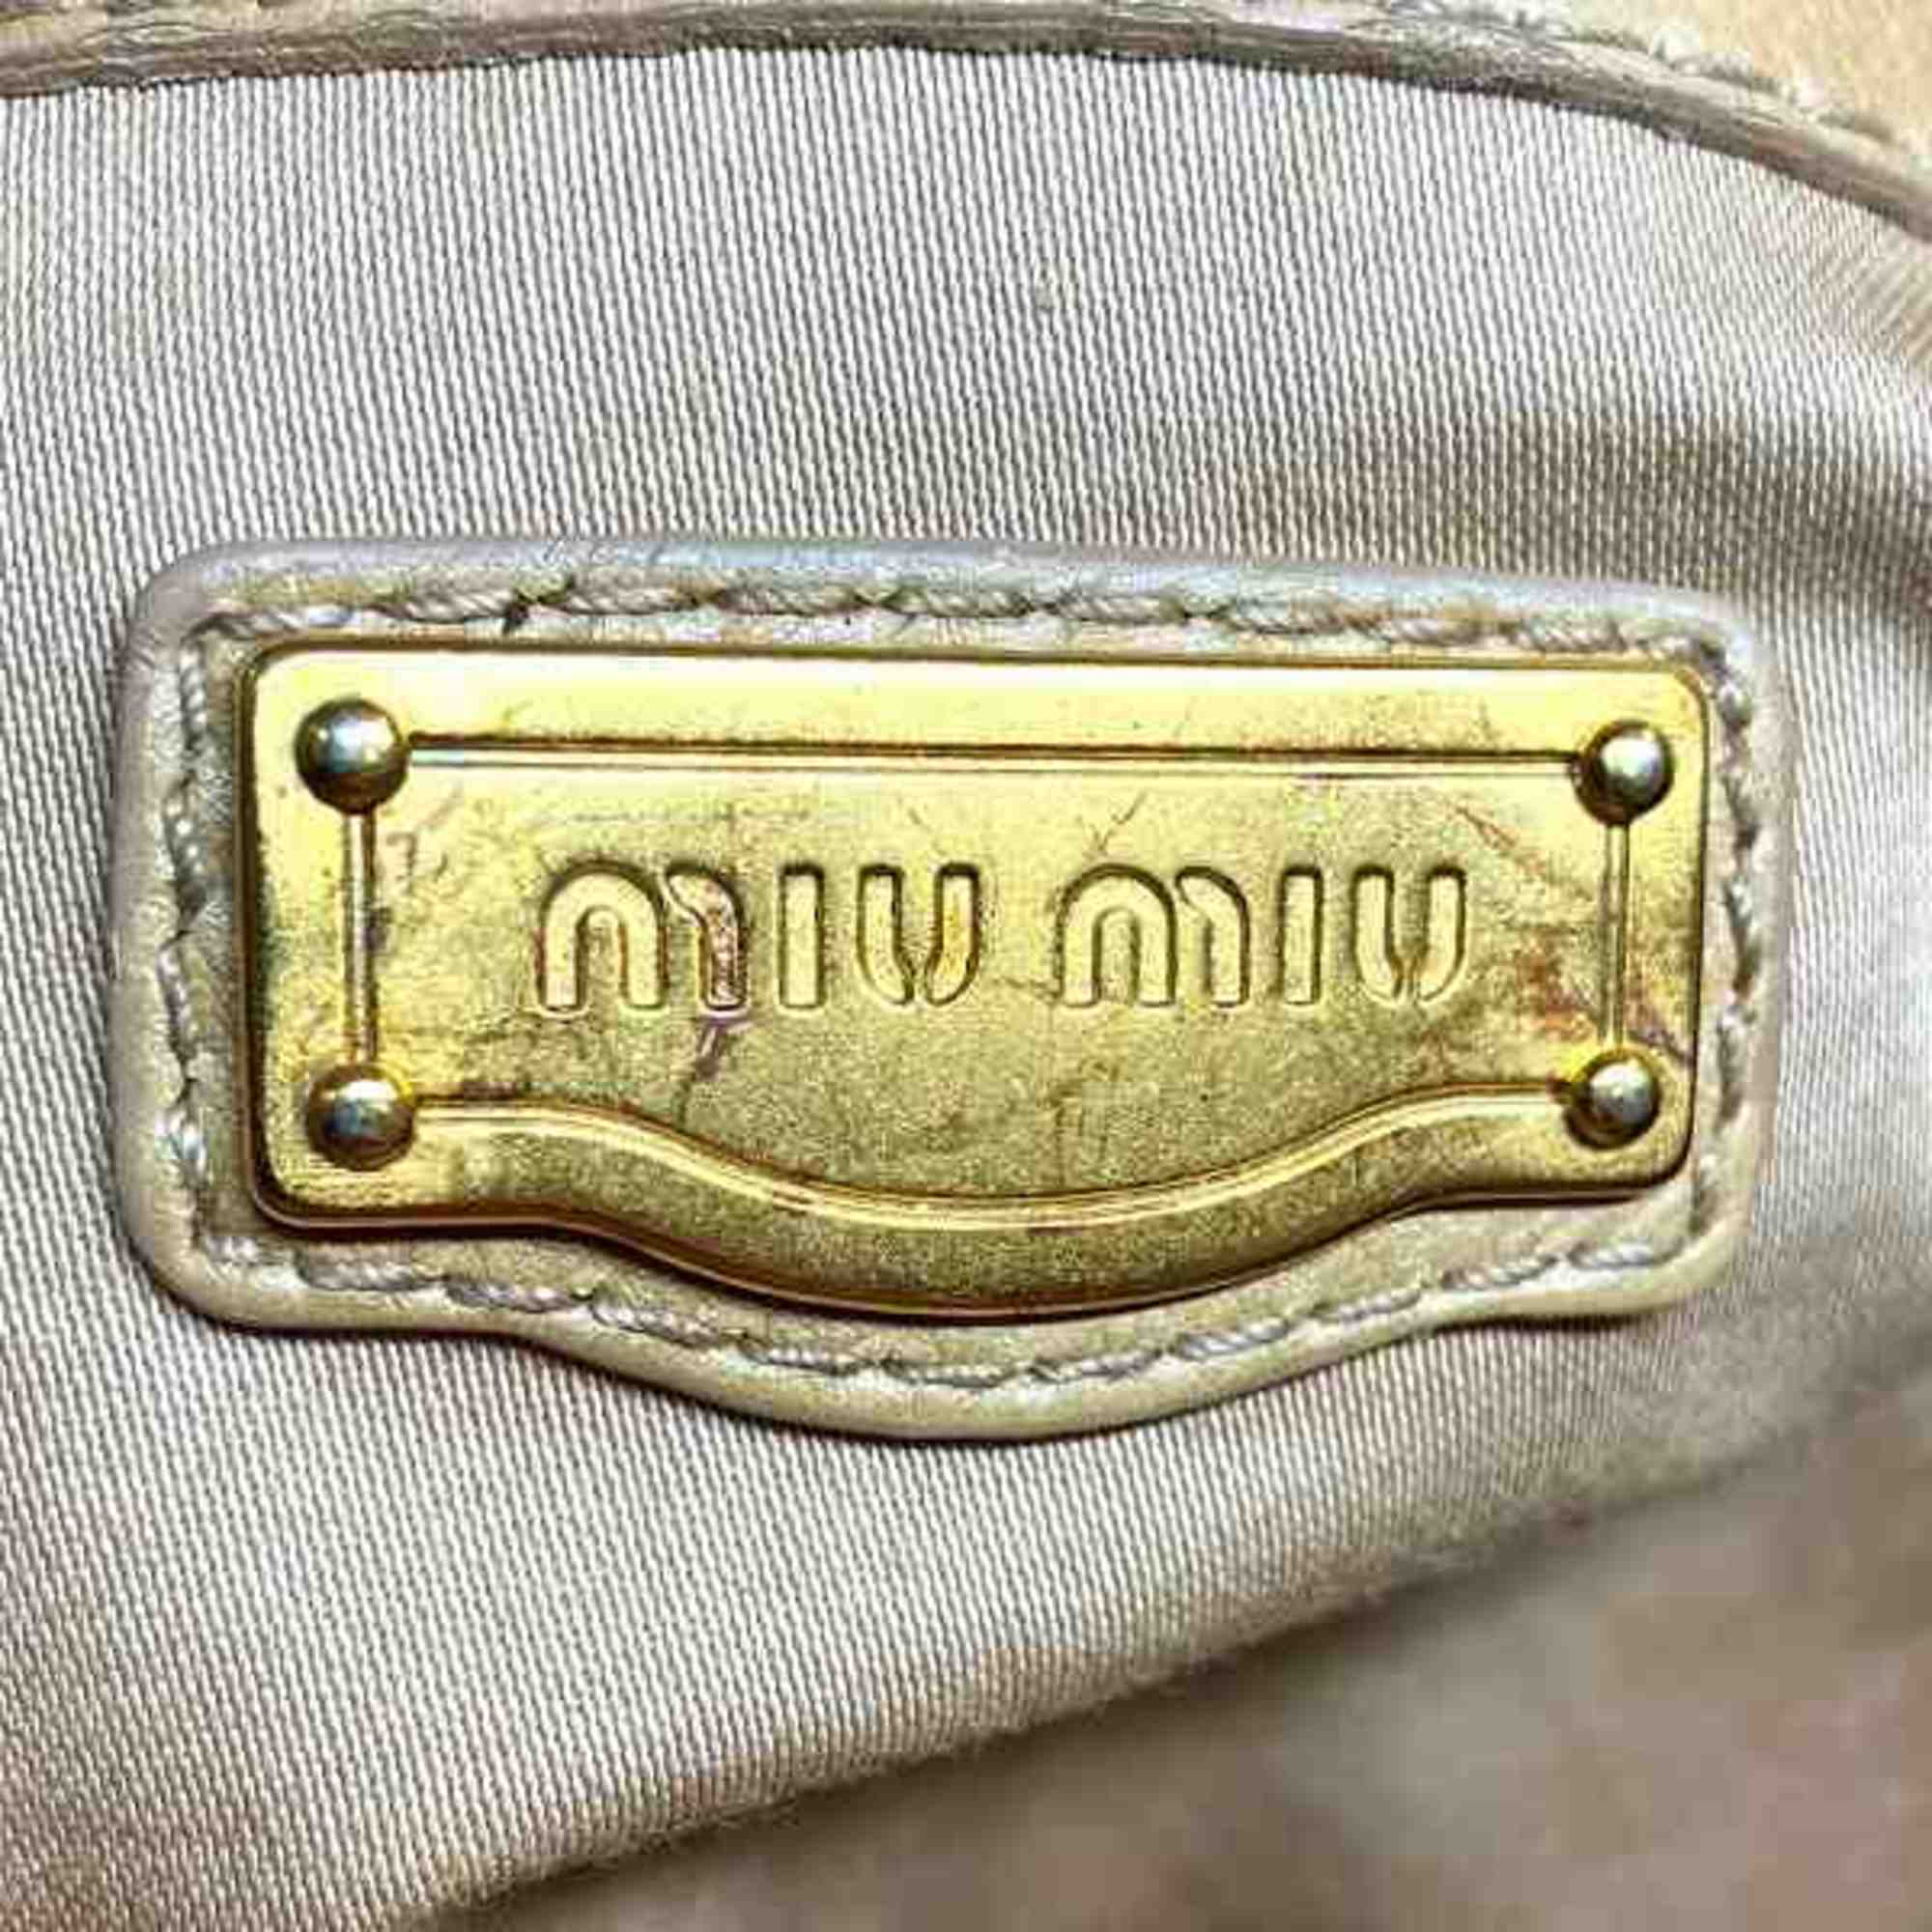 Miu Miu Miu Vitello Luxe Leather 2WAY Bag Handbag Shoulder Ladies